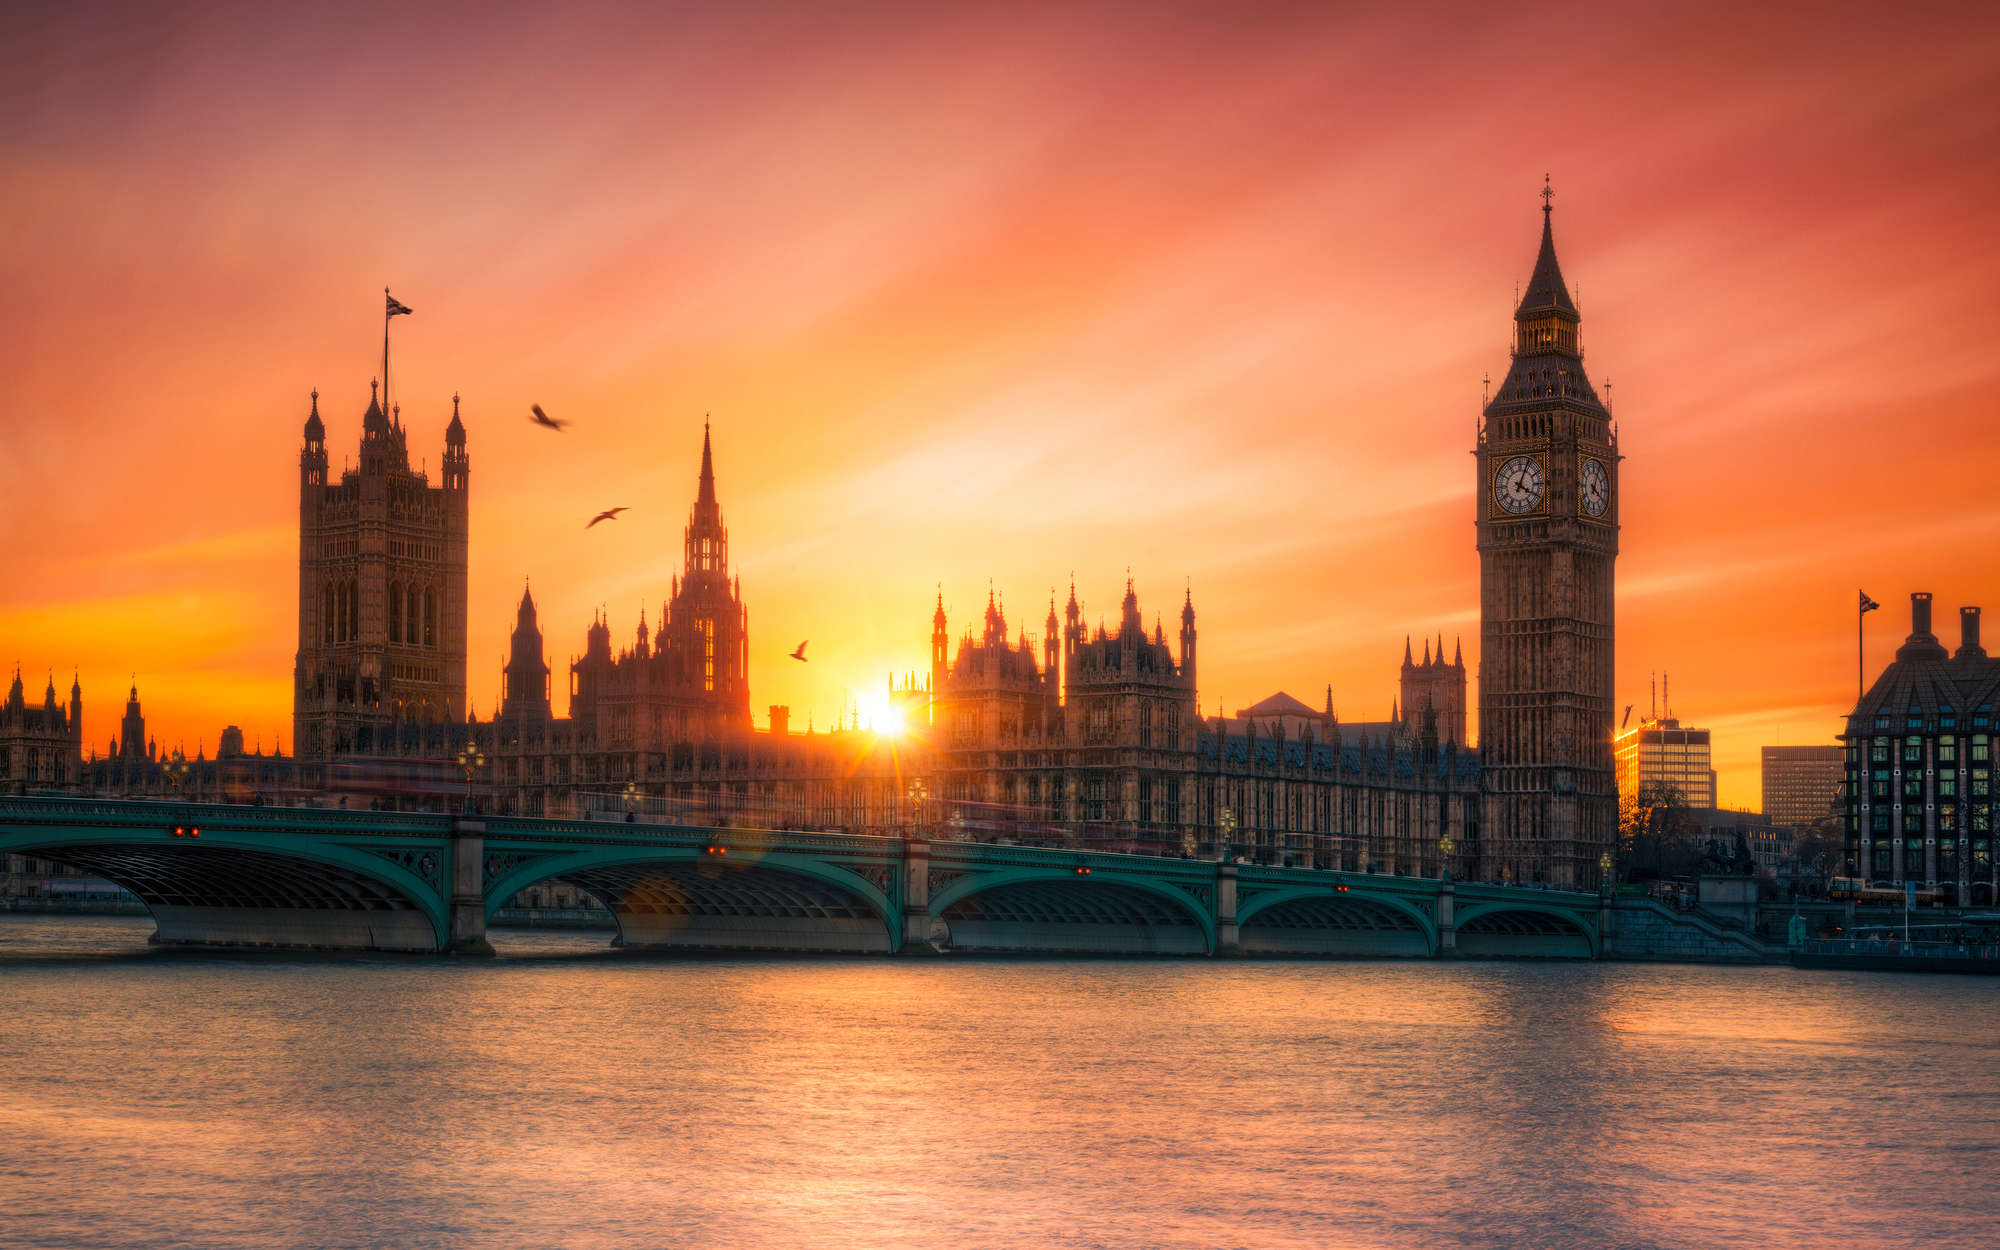             Fotomurali London Skyline in the sunset - Pile liscio Premium
        